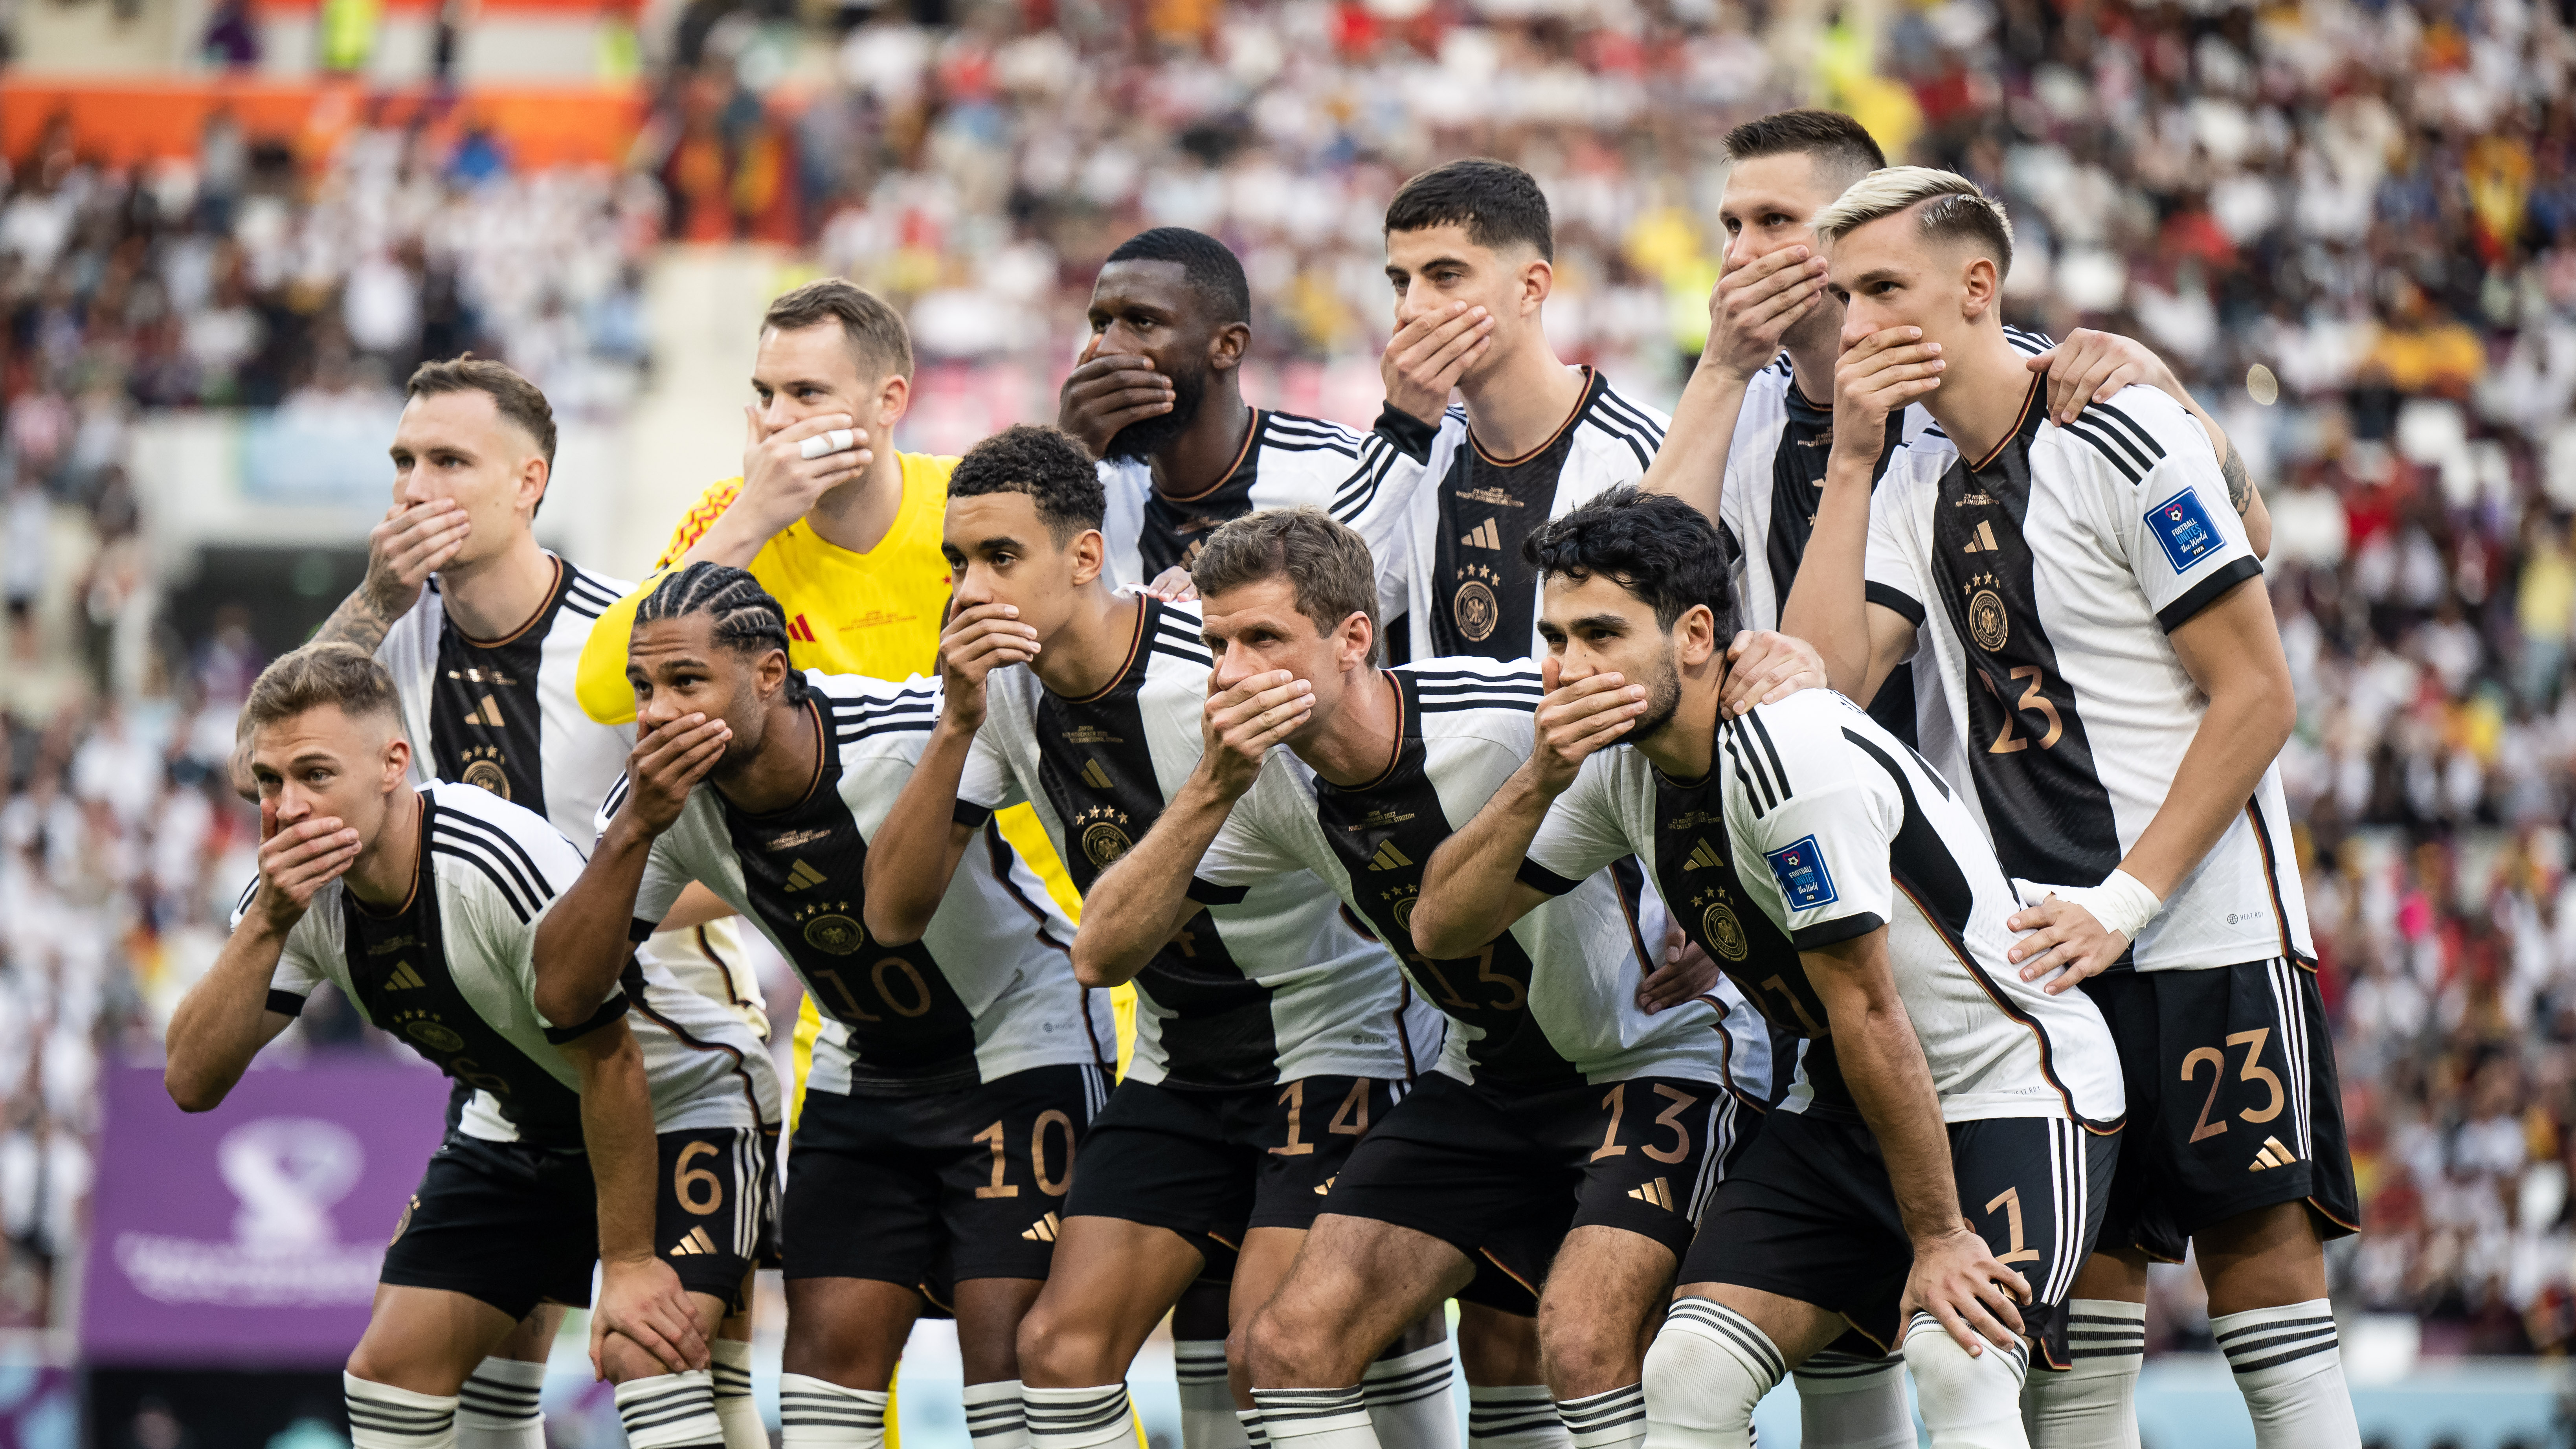 Entenda como a Fifa escolheu o Catar como sede da Copa do Mundo de